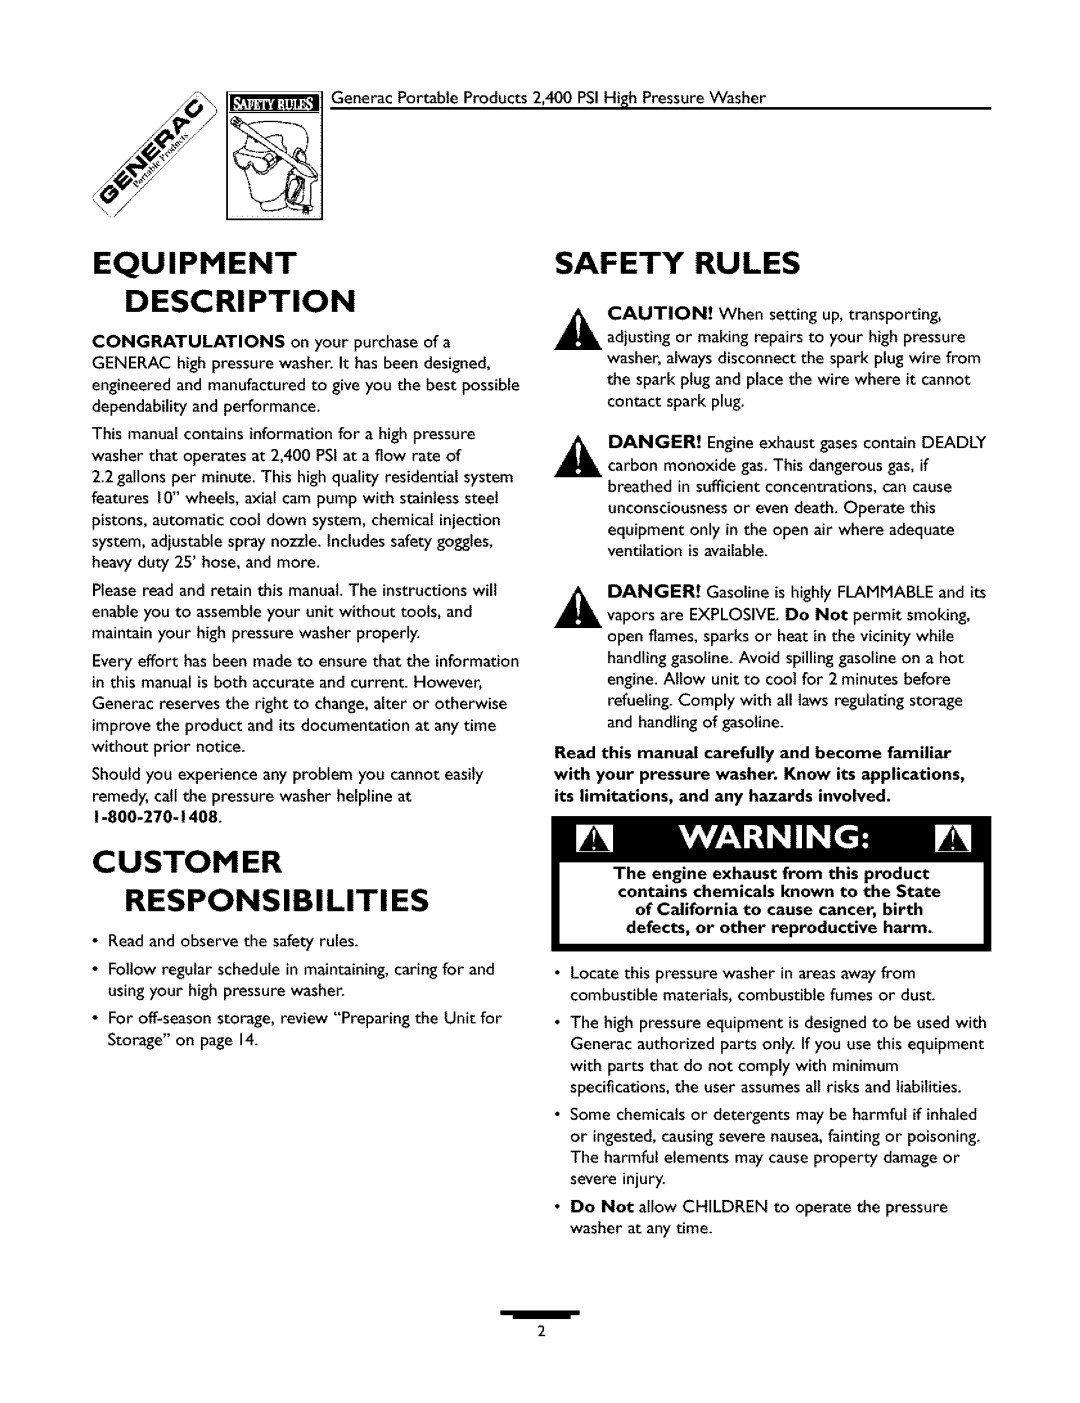 Generac 1537-0 owner manual Equipment Description, Safety, Rules, Customer Responsibilities, Aution, Danger 